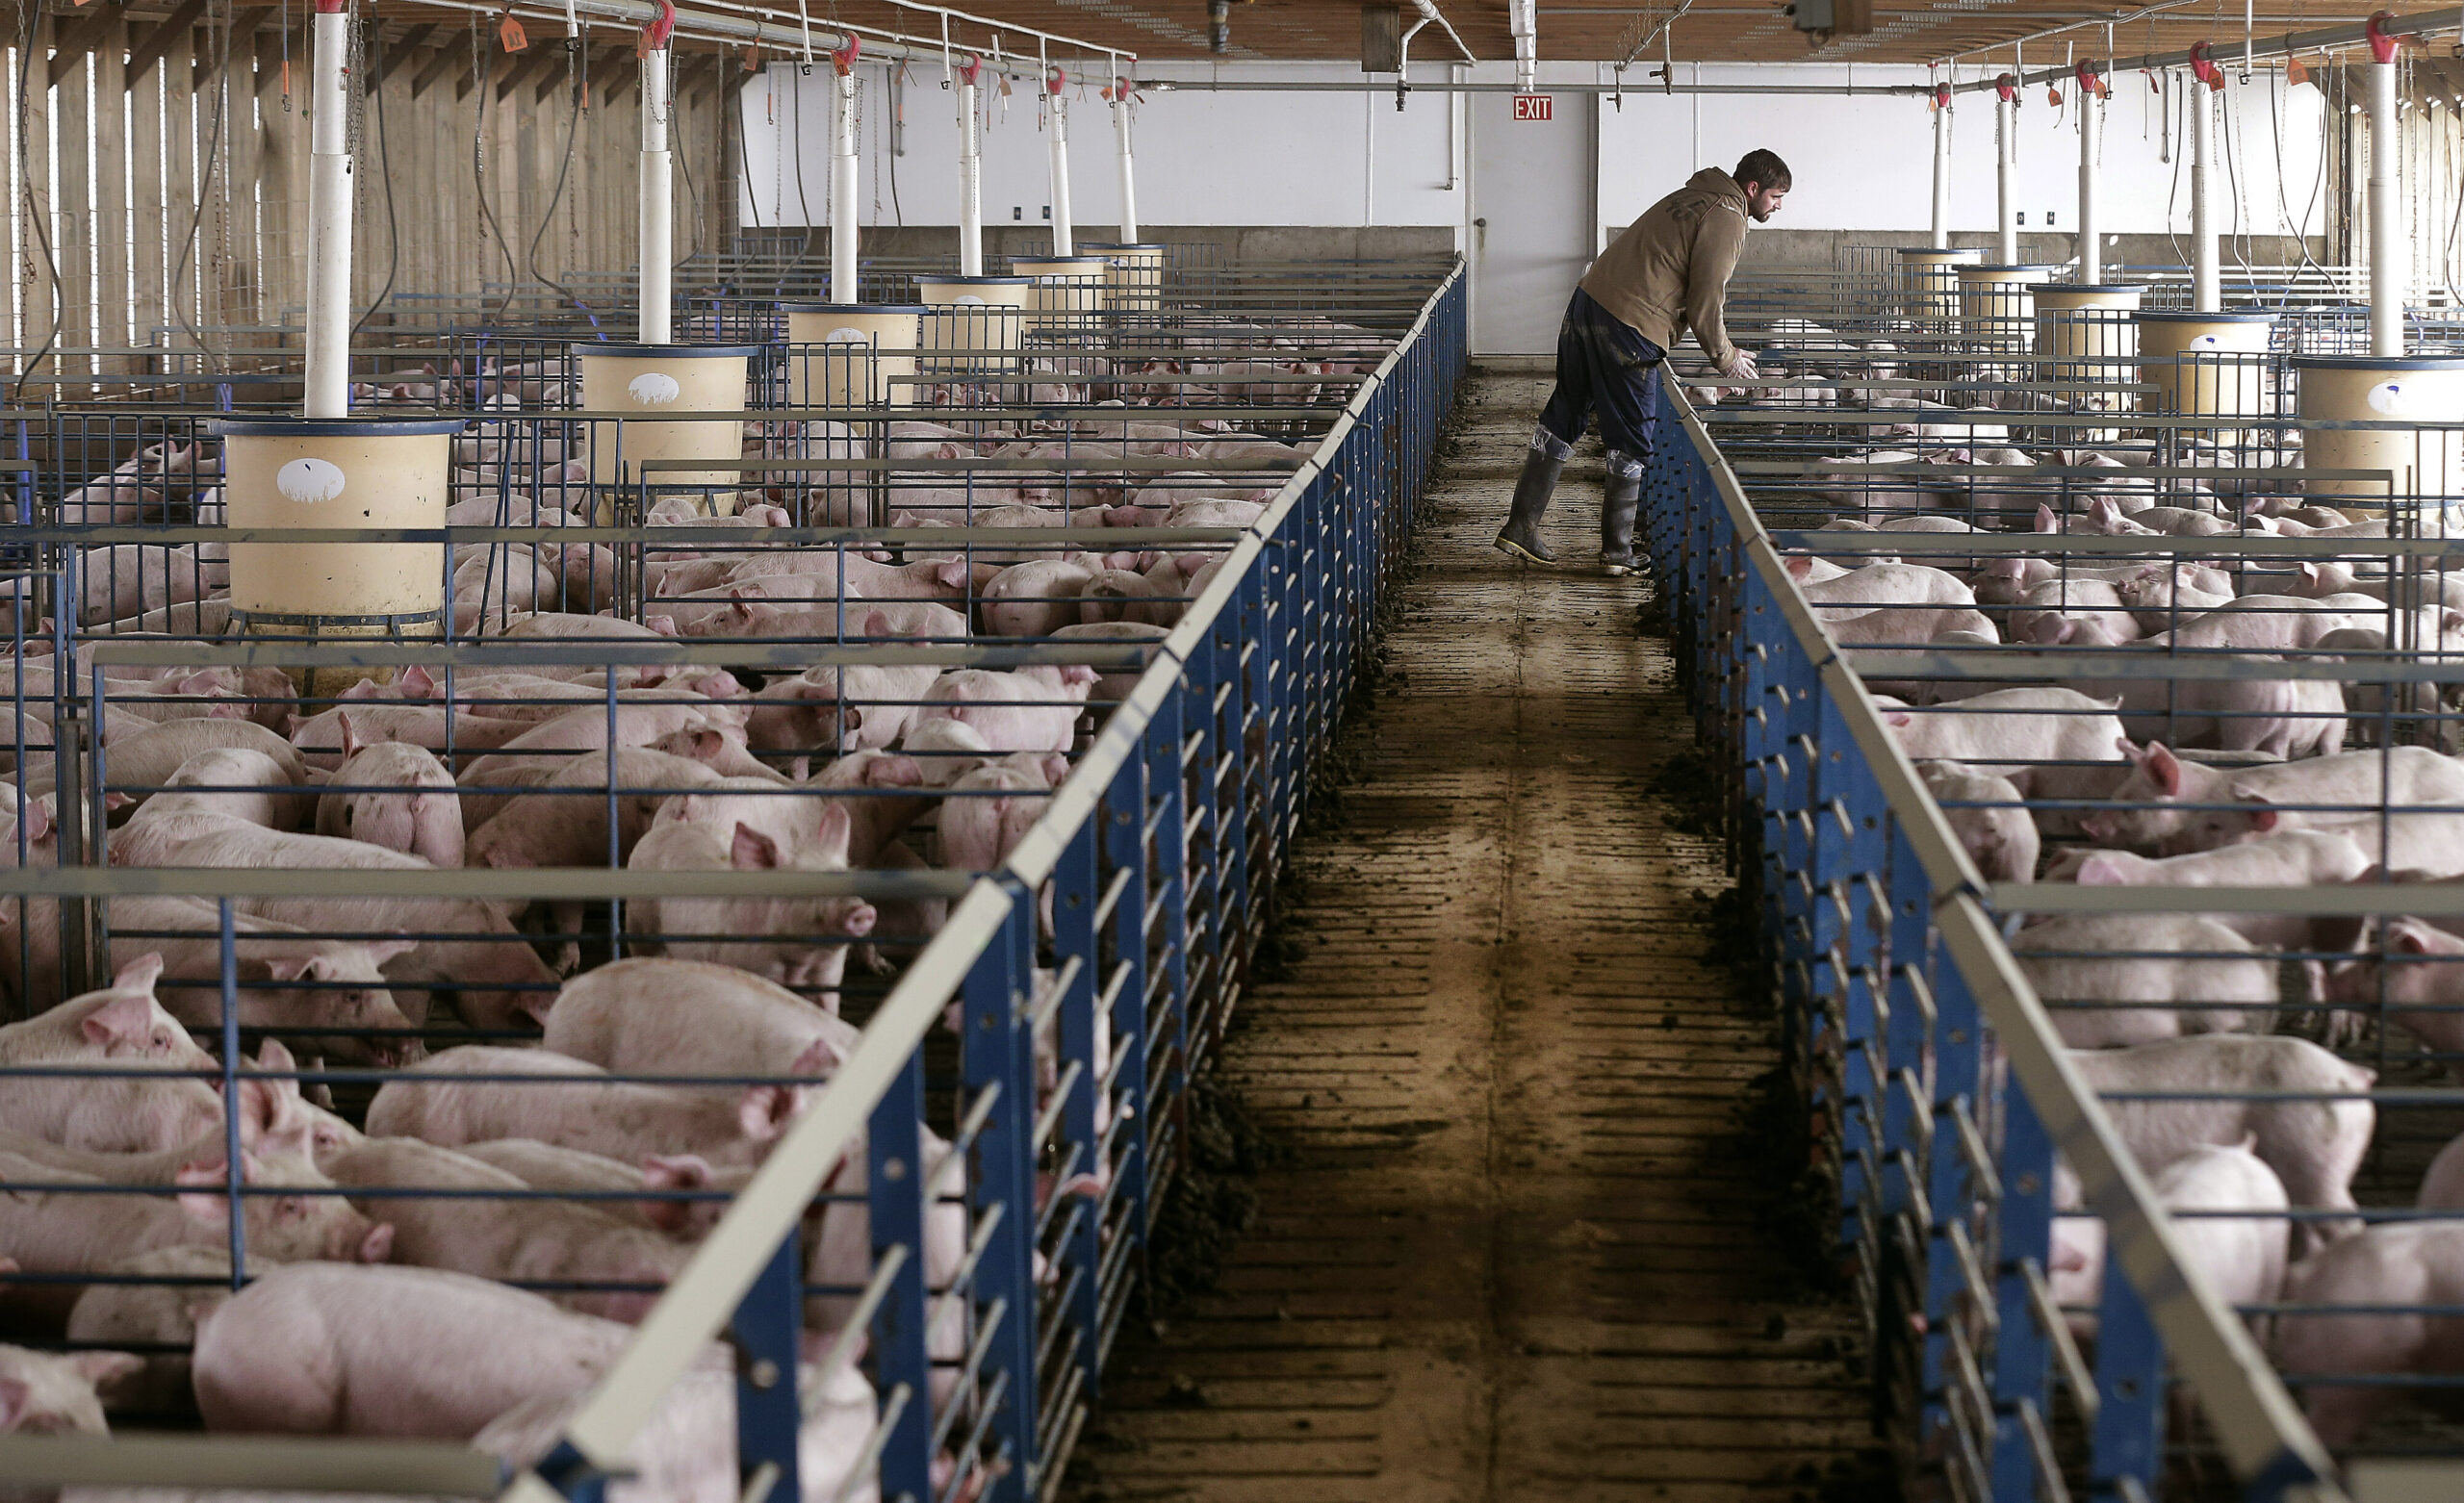 Amid new rules on antibiotics in livestock, Wisconsin farmer says producers still need medications